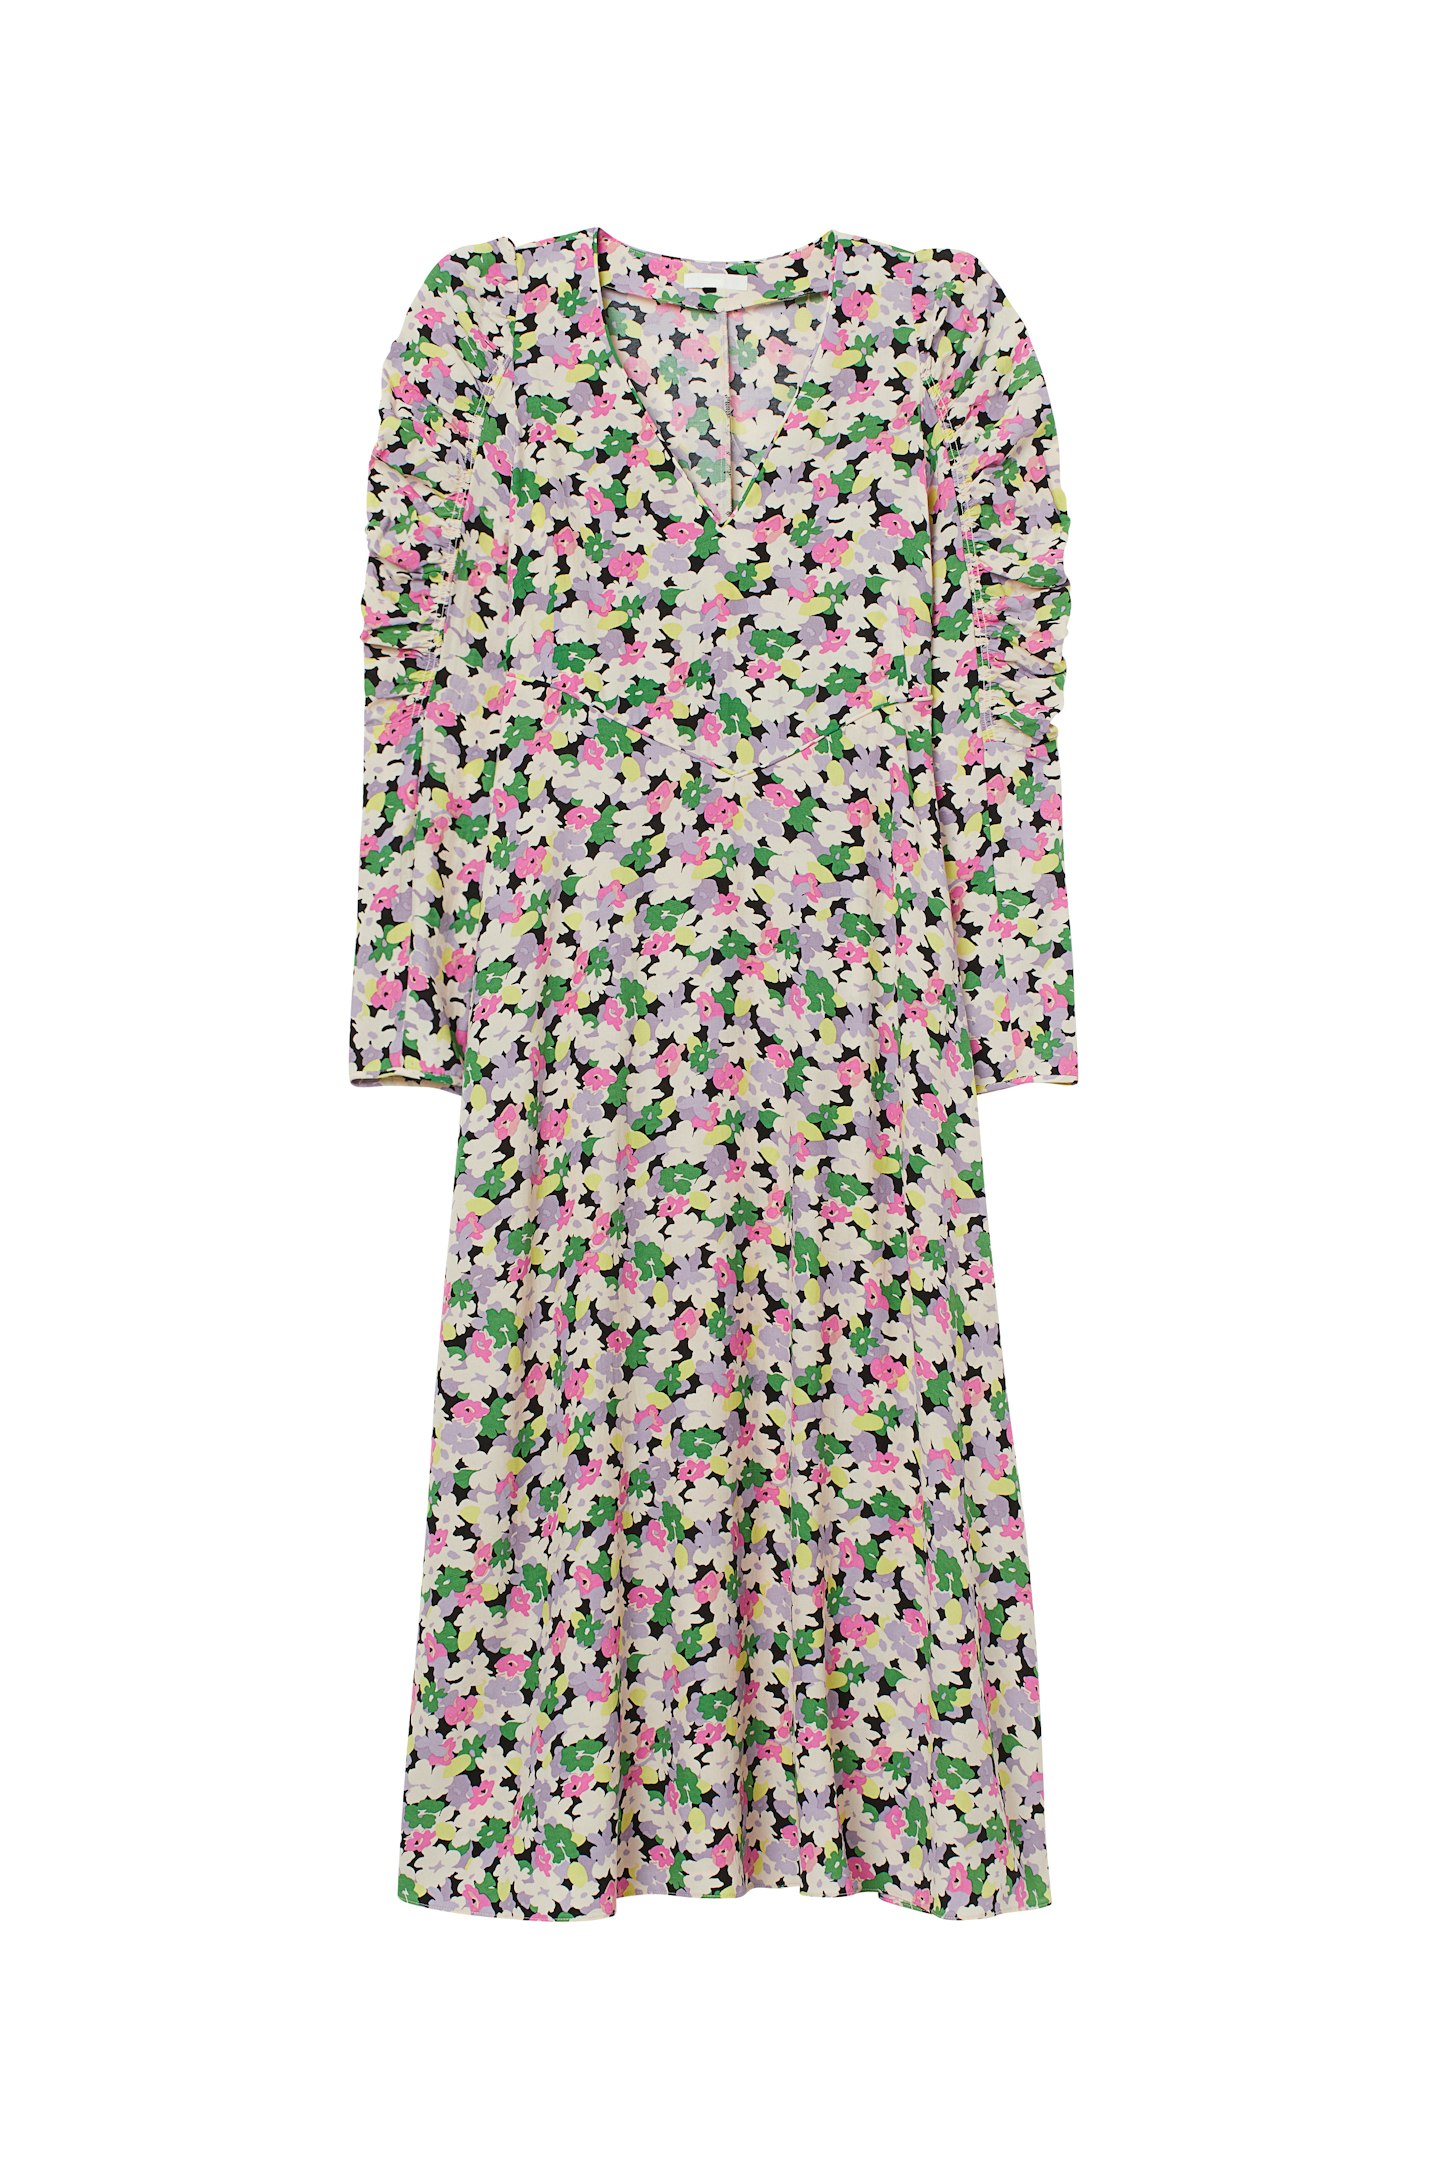 Lyocell-Blend Dress, £24.99